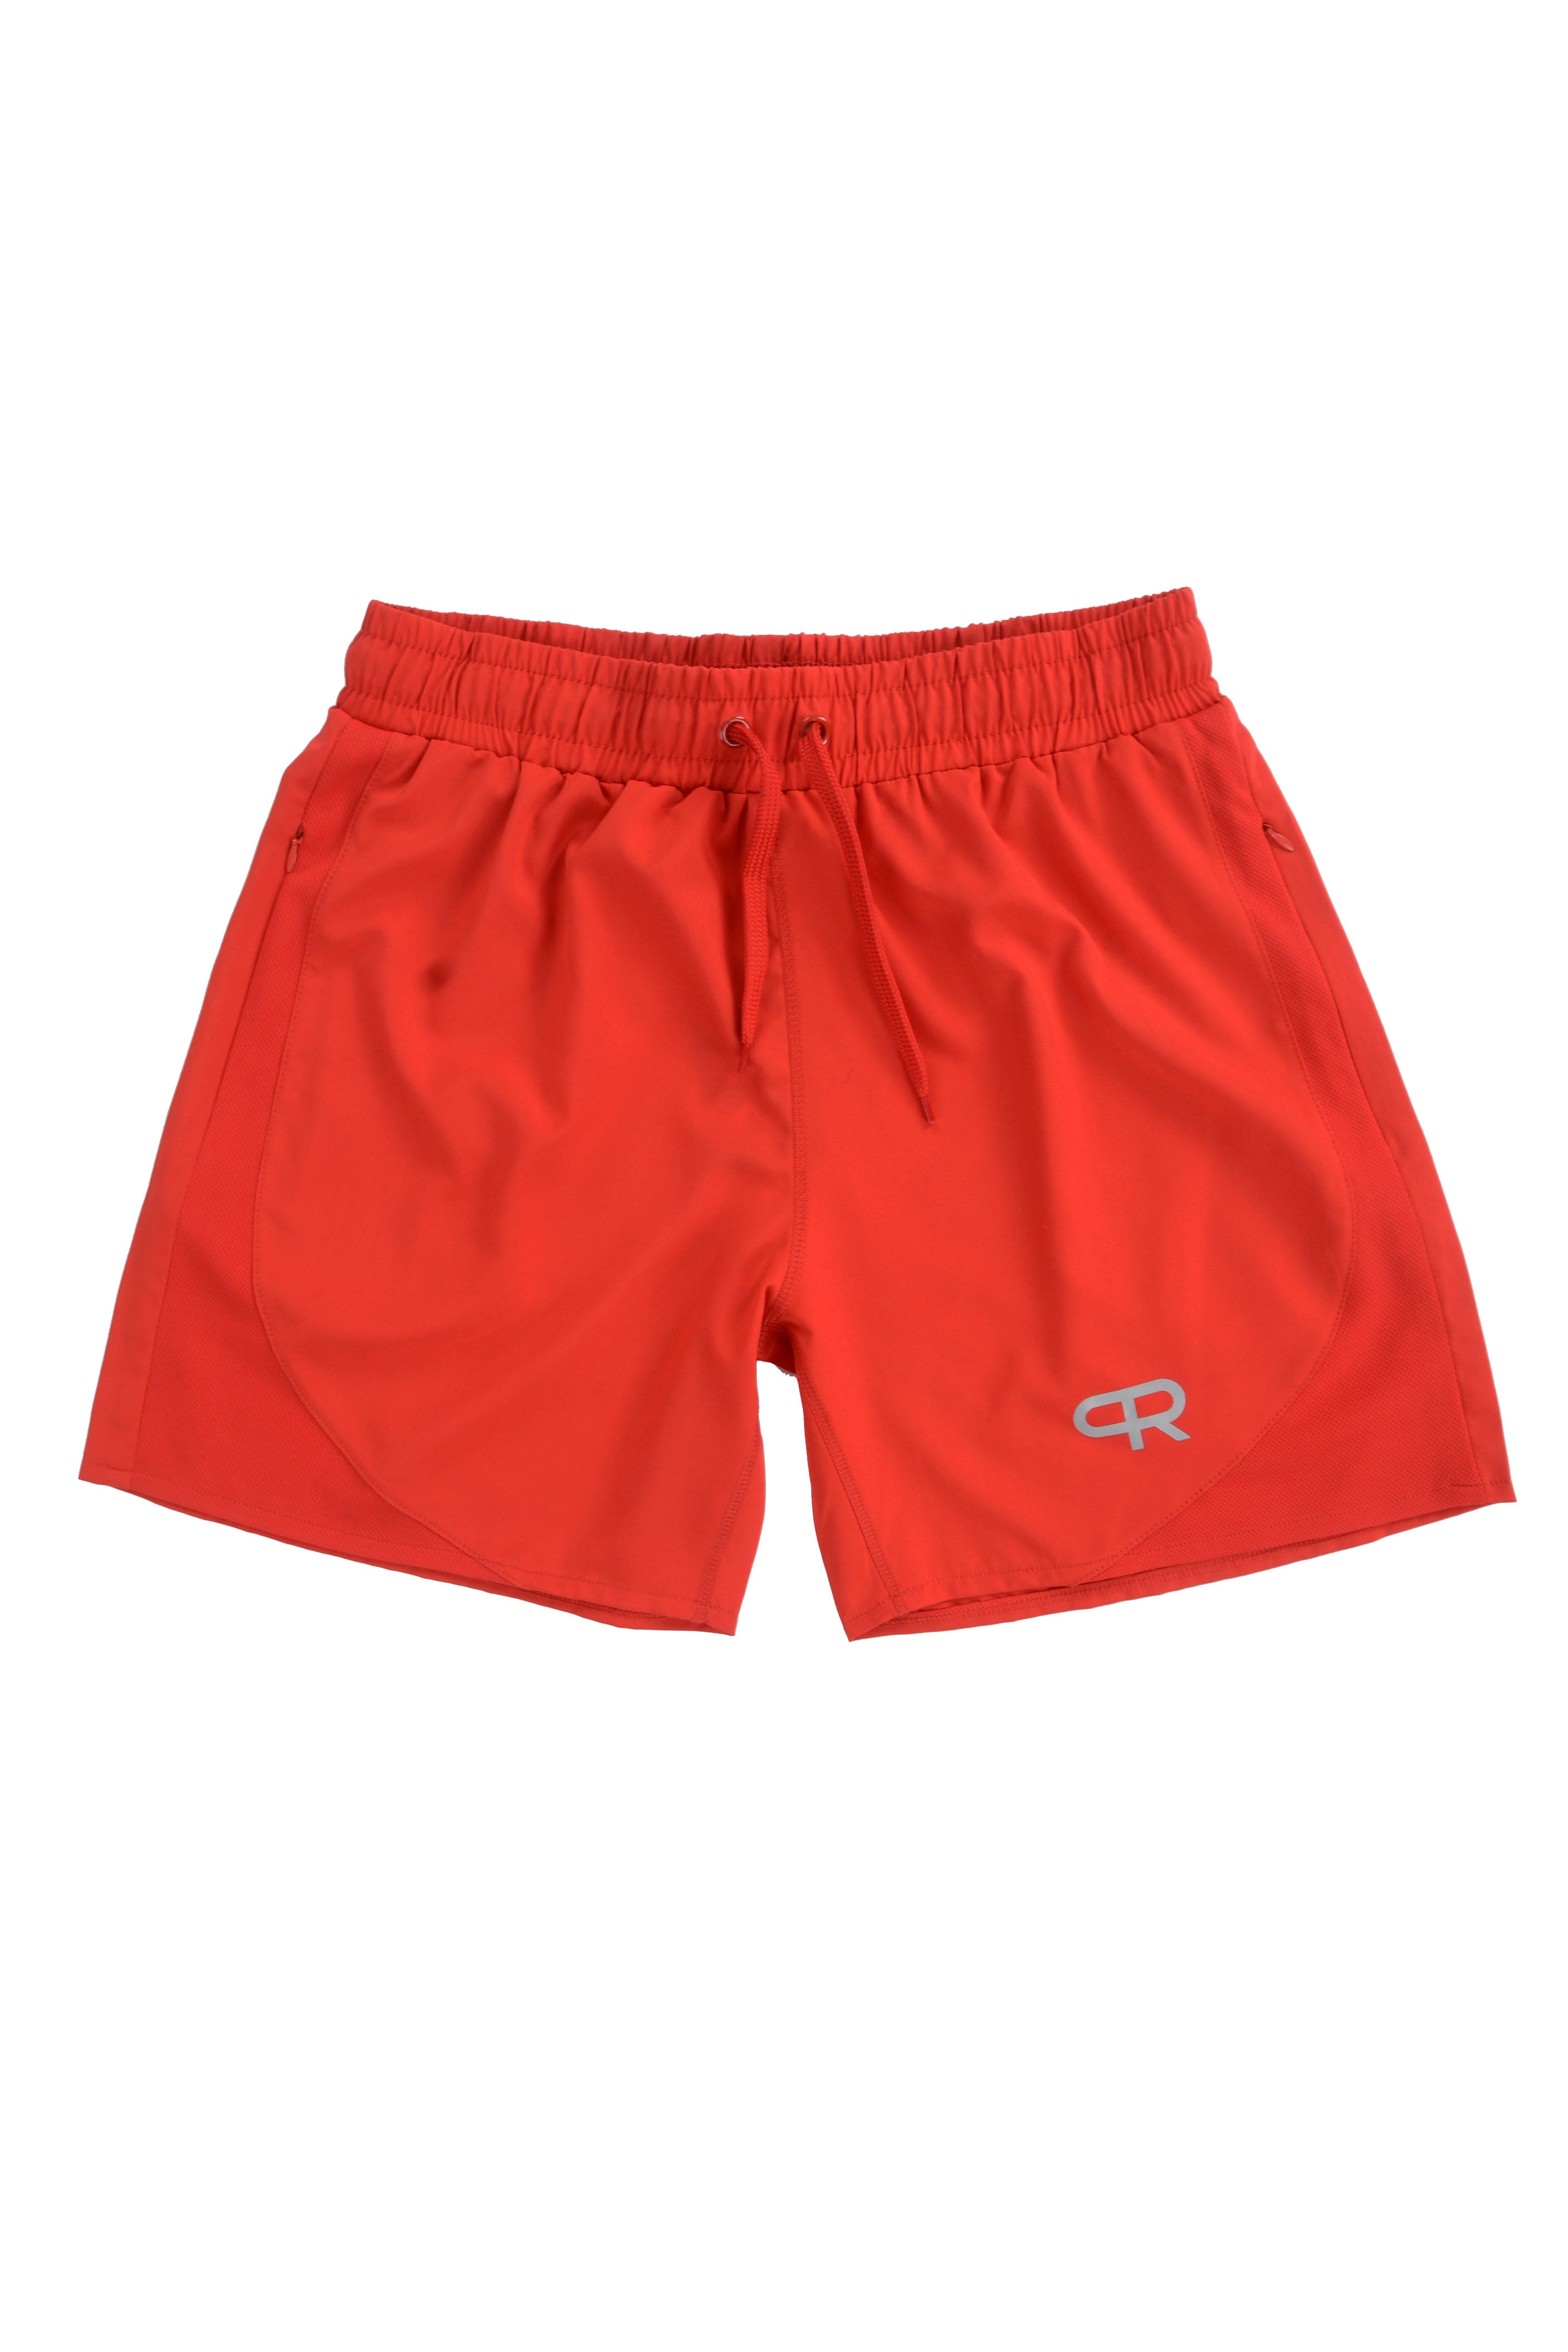 PR Lifting Shorts W/Zipper Pockets - PR102 - All Red